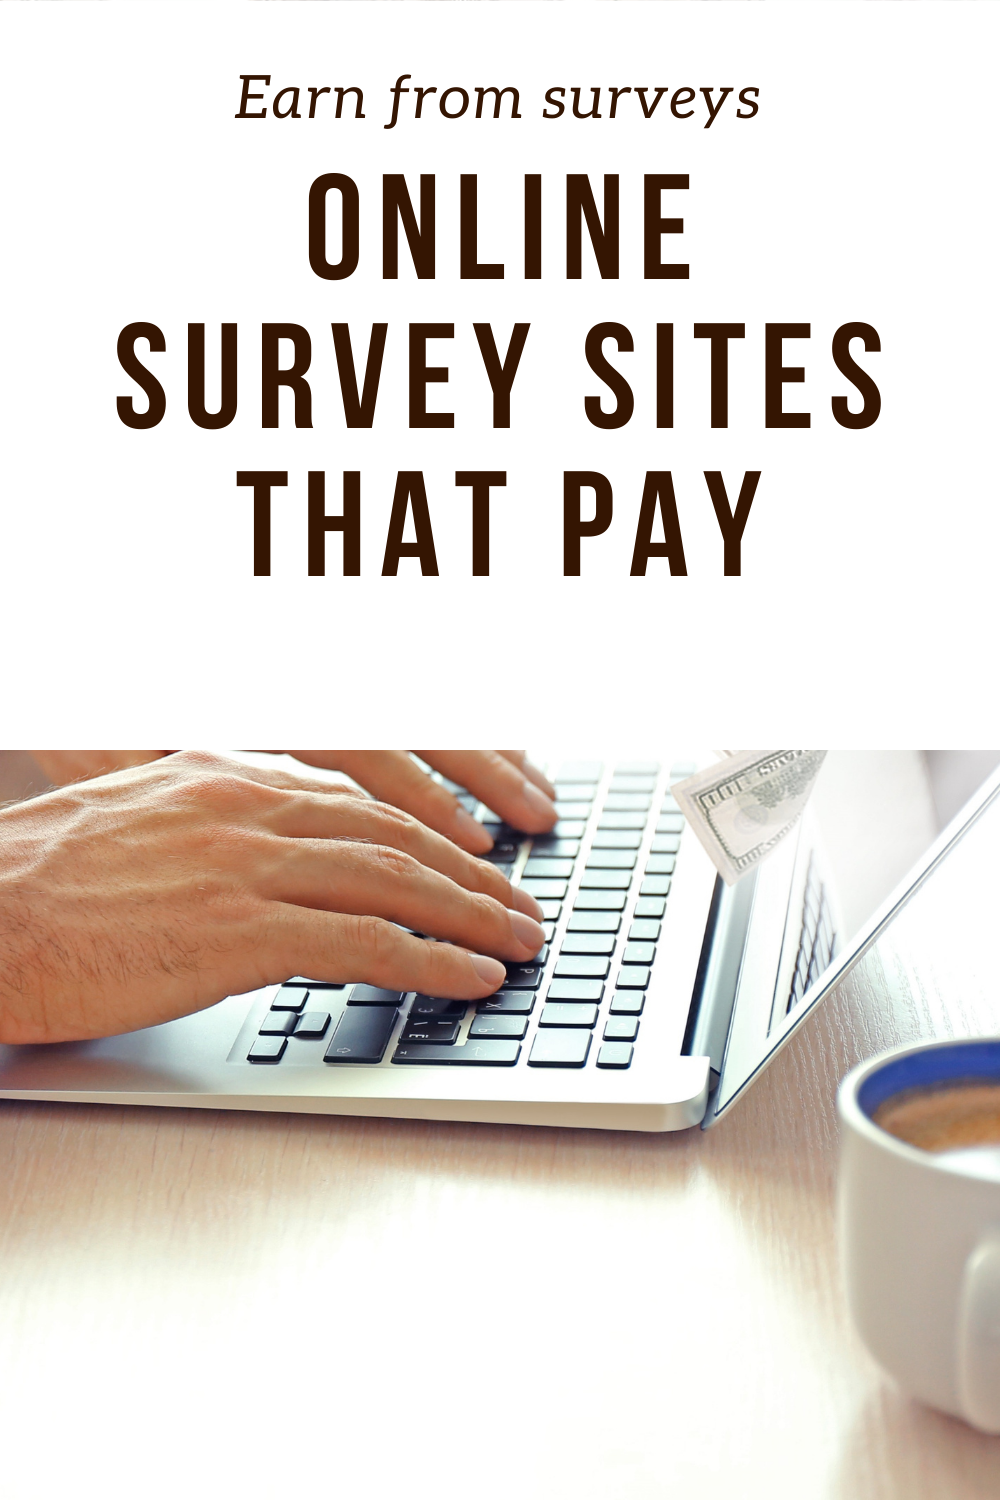 Online survey sites that pay